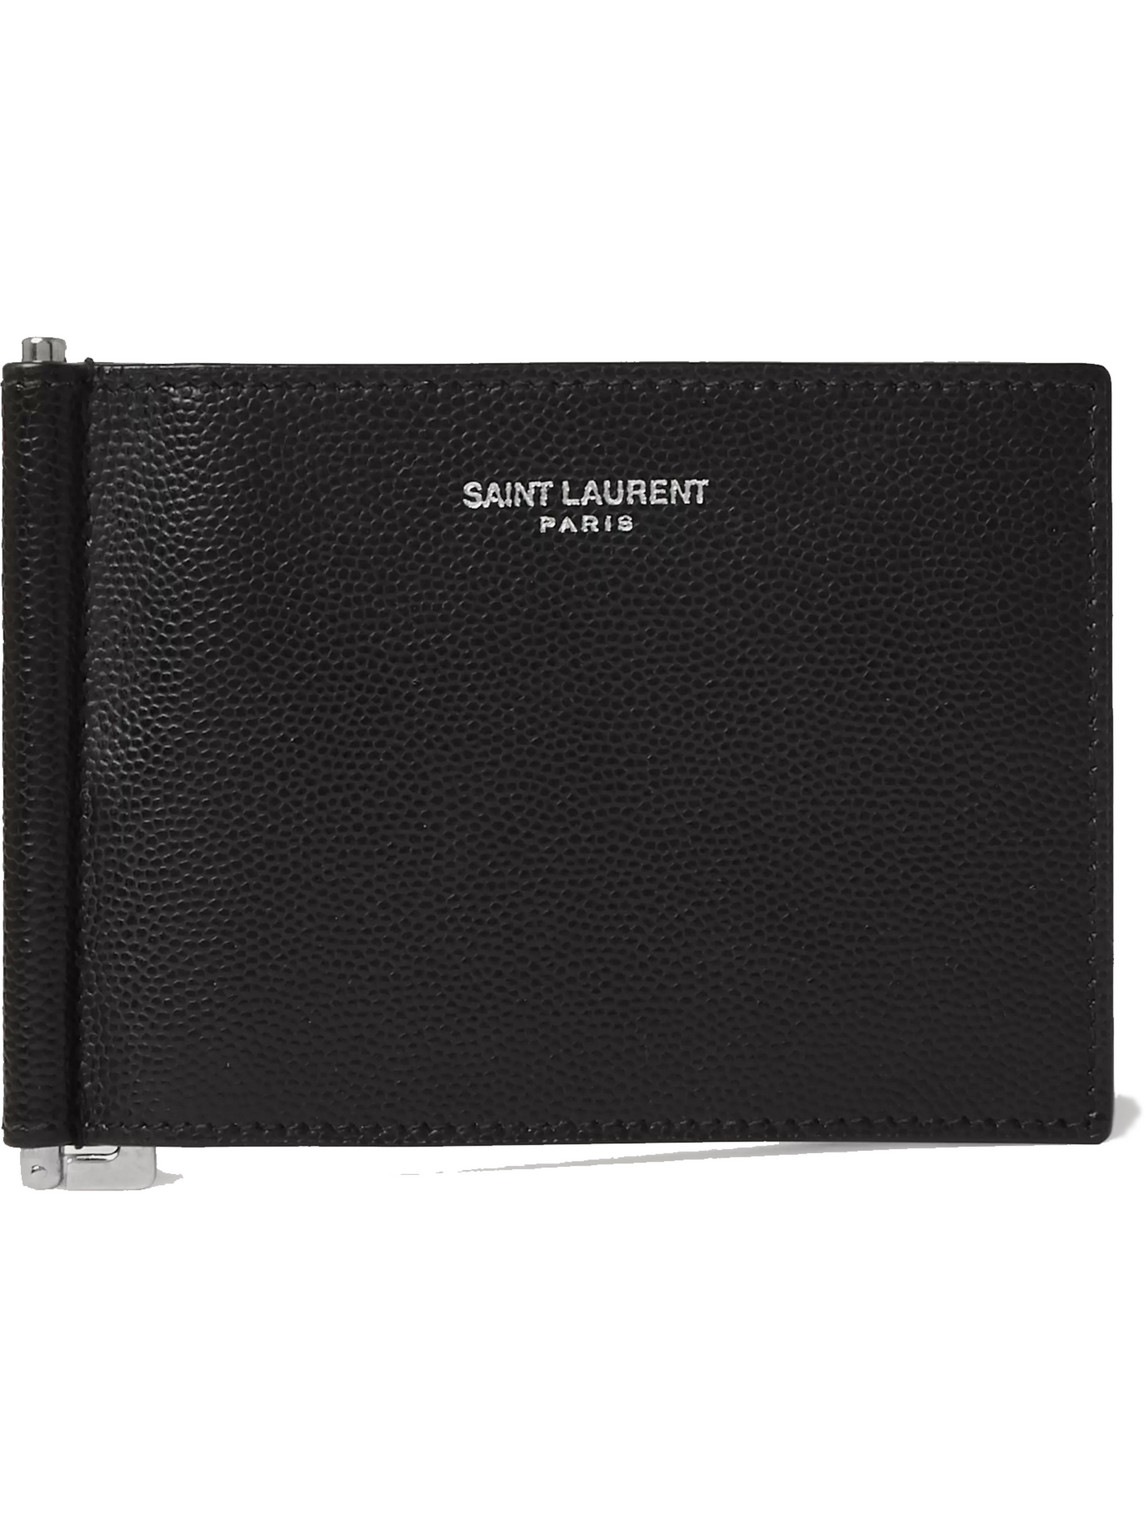 Saint Laurent Pebble-grain Leather Billfold Wallet With Money Clip In Black